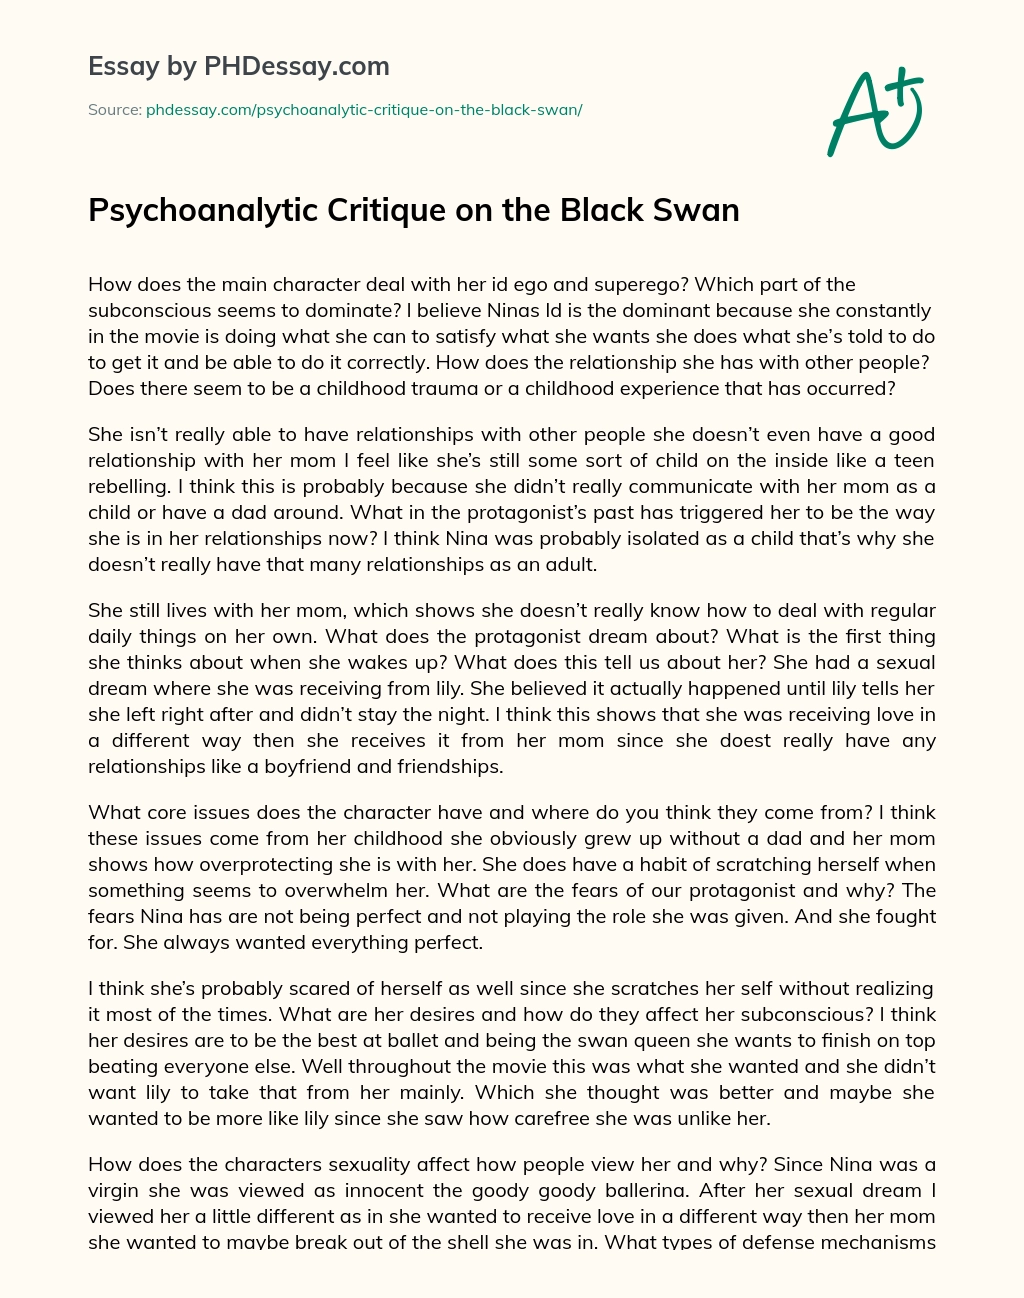 Psychoanalytic Critique on the Black Swan essay